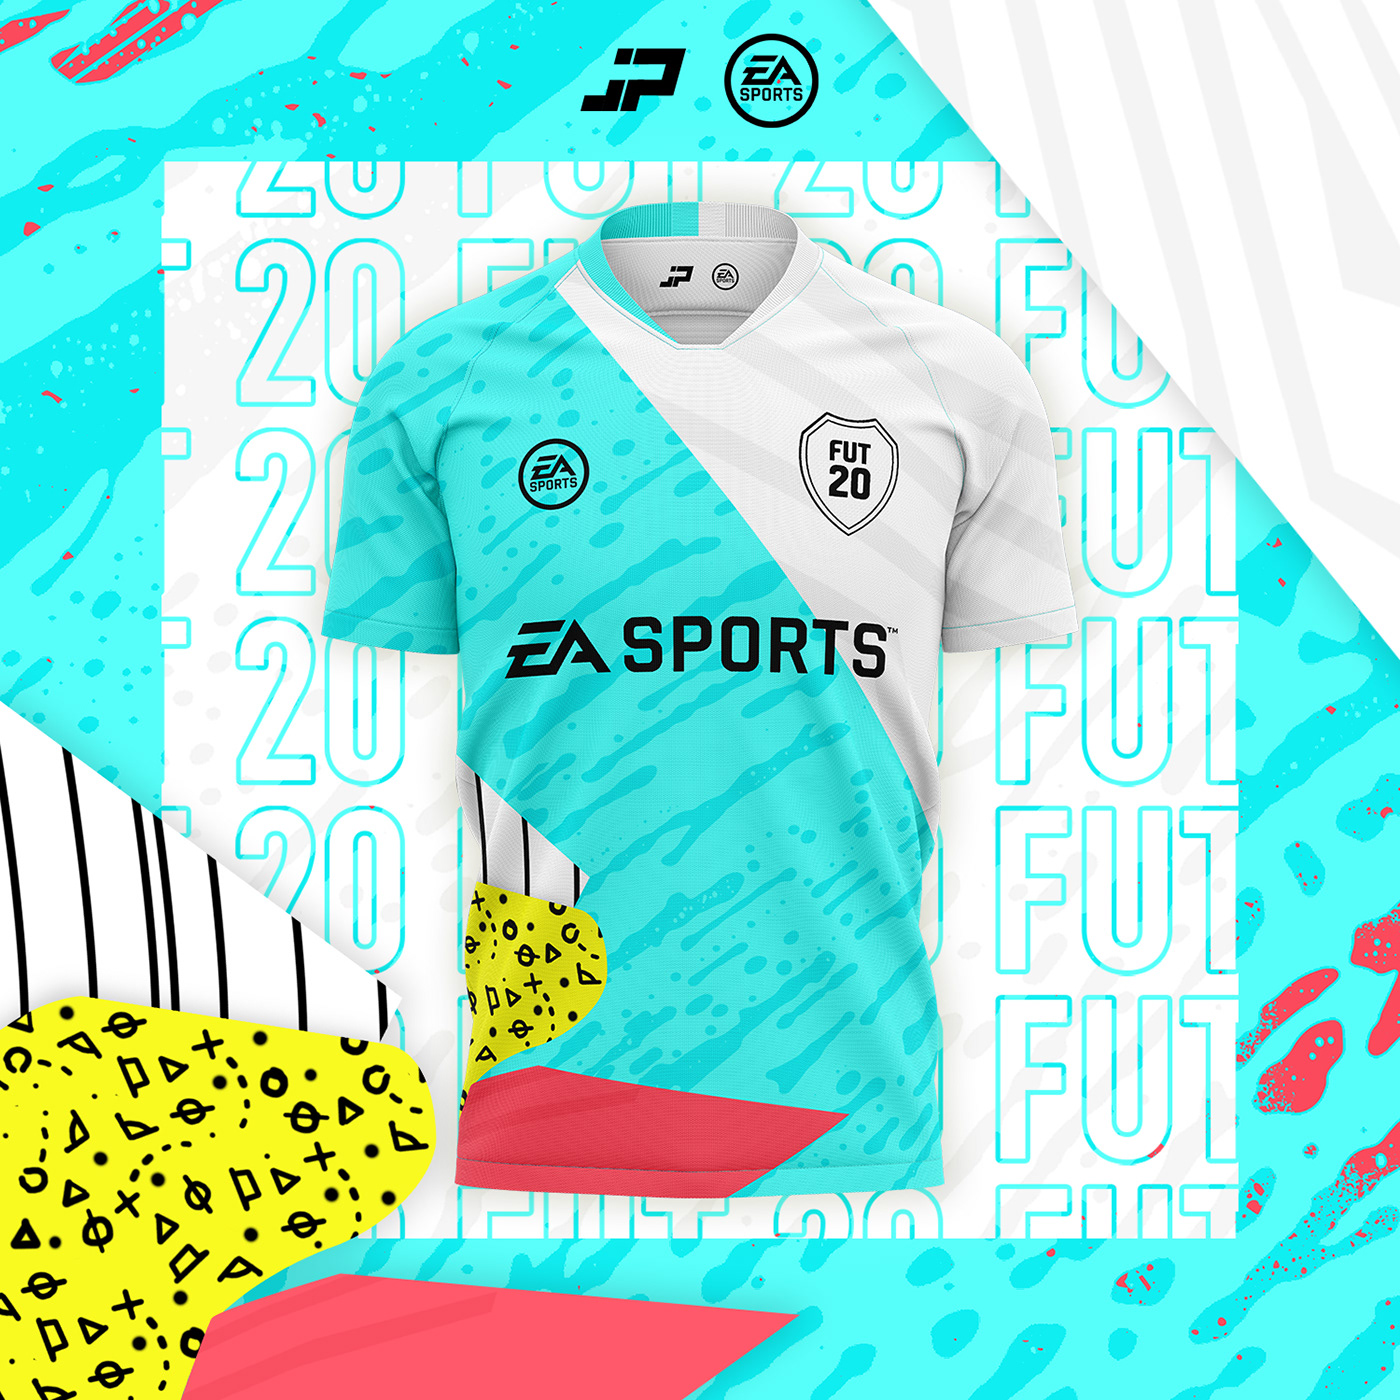 FIFA FUT 20 fifa 20 concept kit fantasy kit football soccer jersey shirt